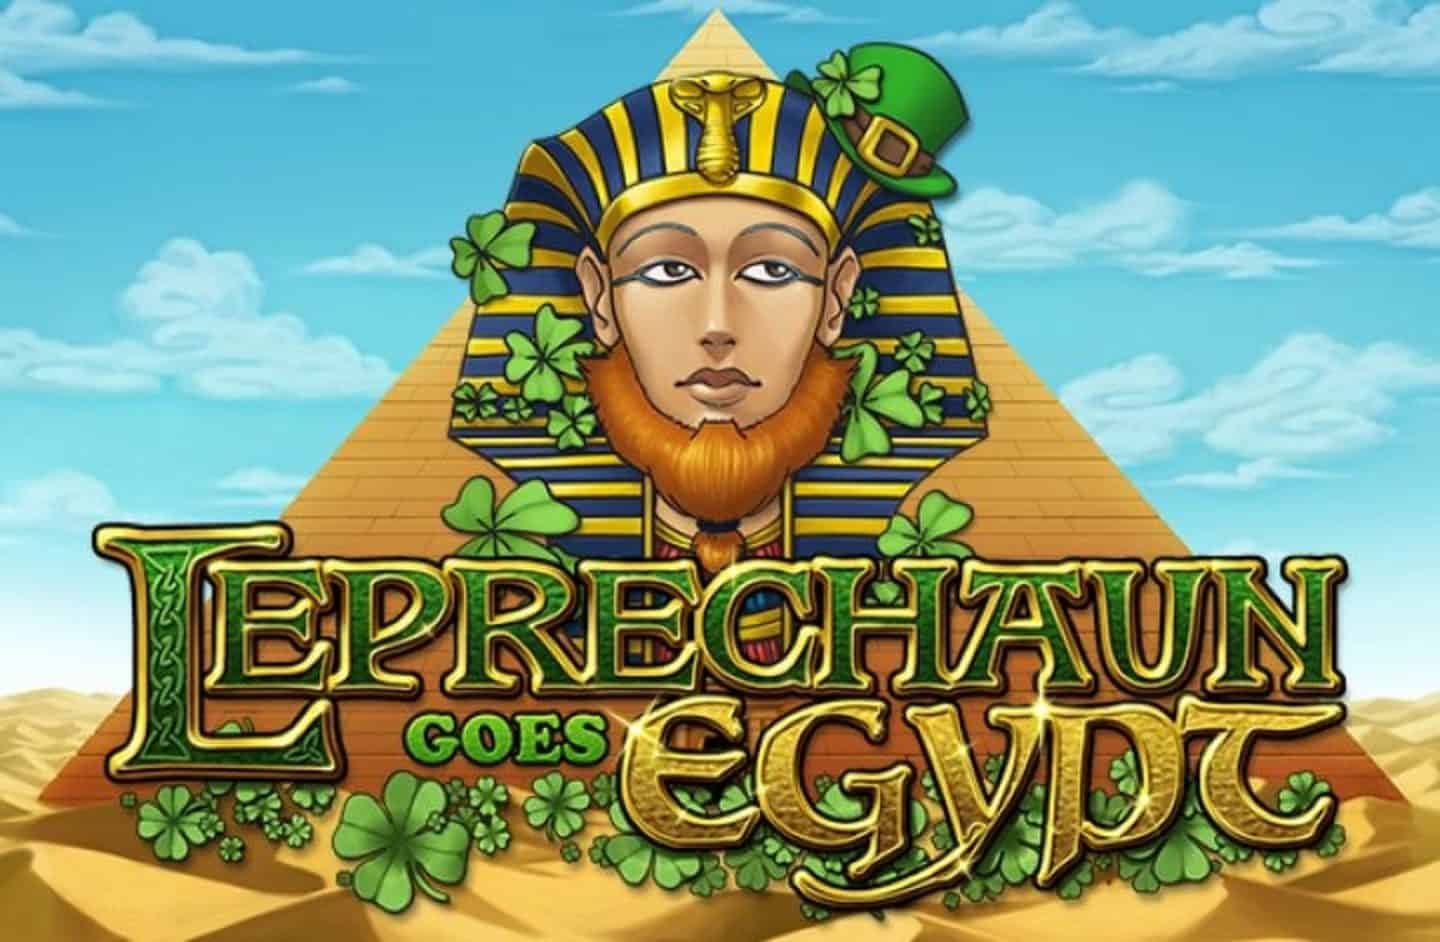 Leprechaun goes Egypt slot cover image